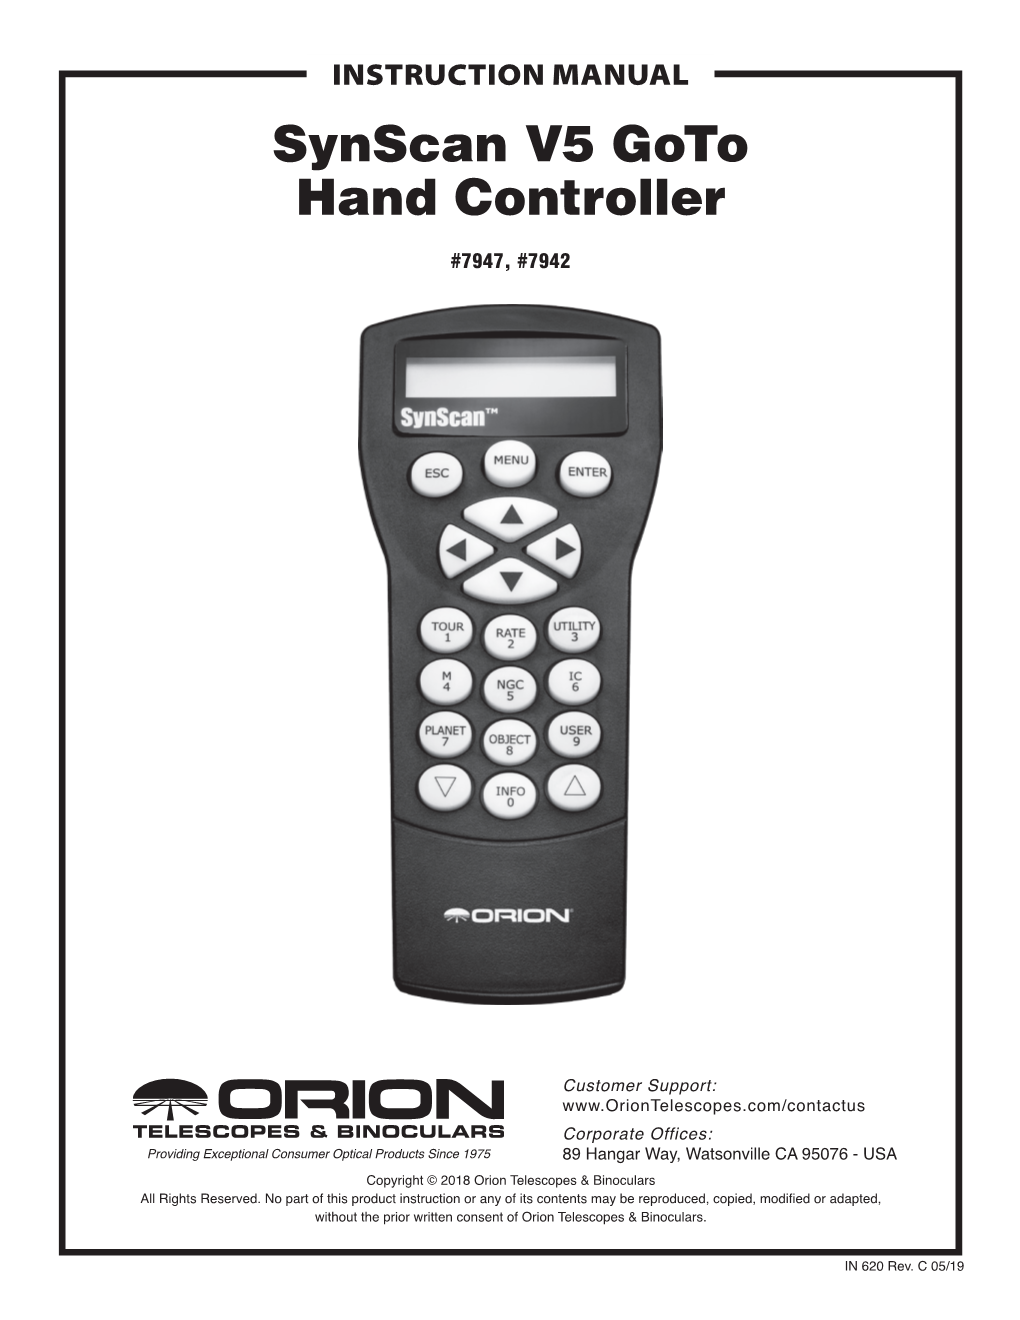 Synscan V5 Goto Hand Controller